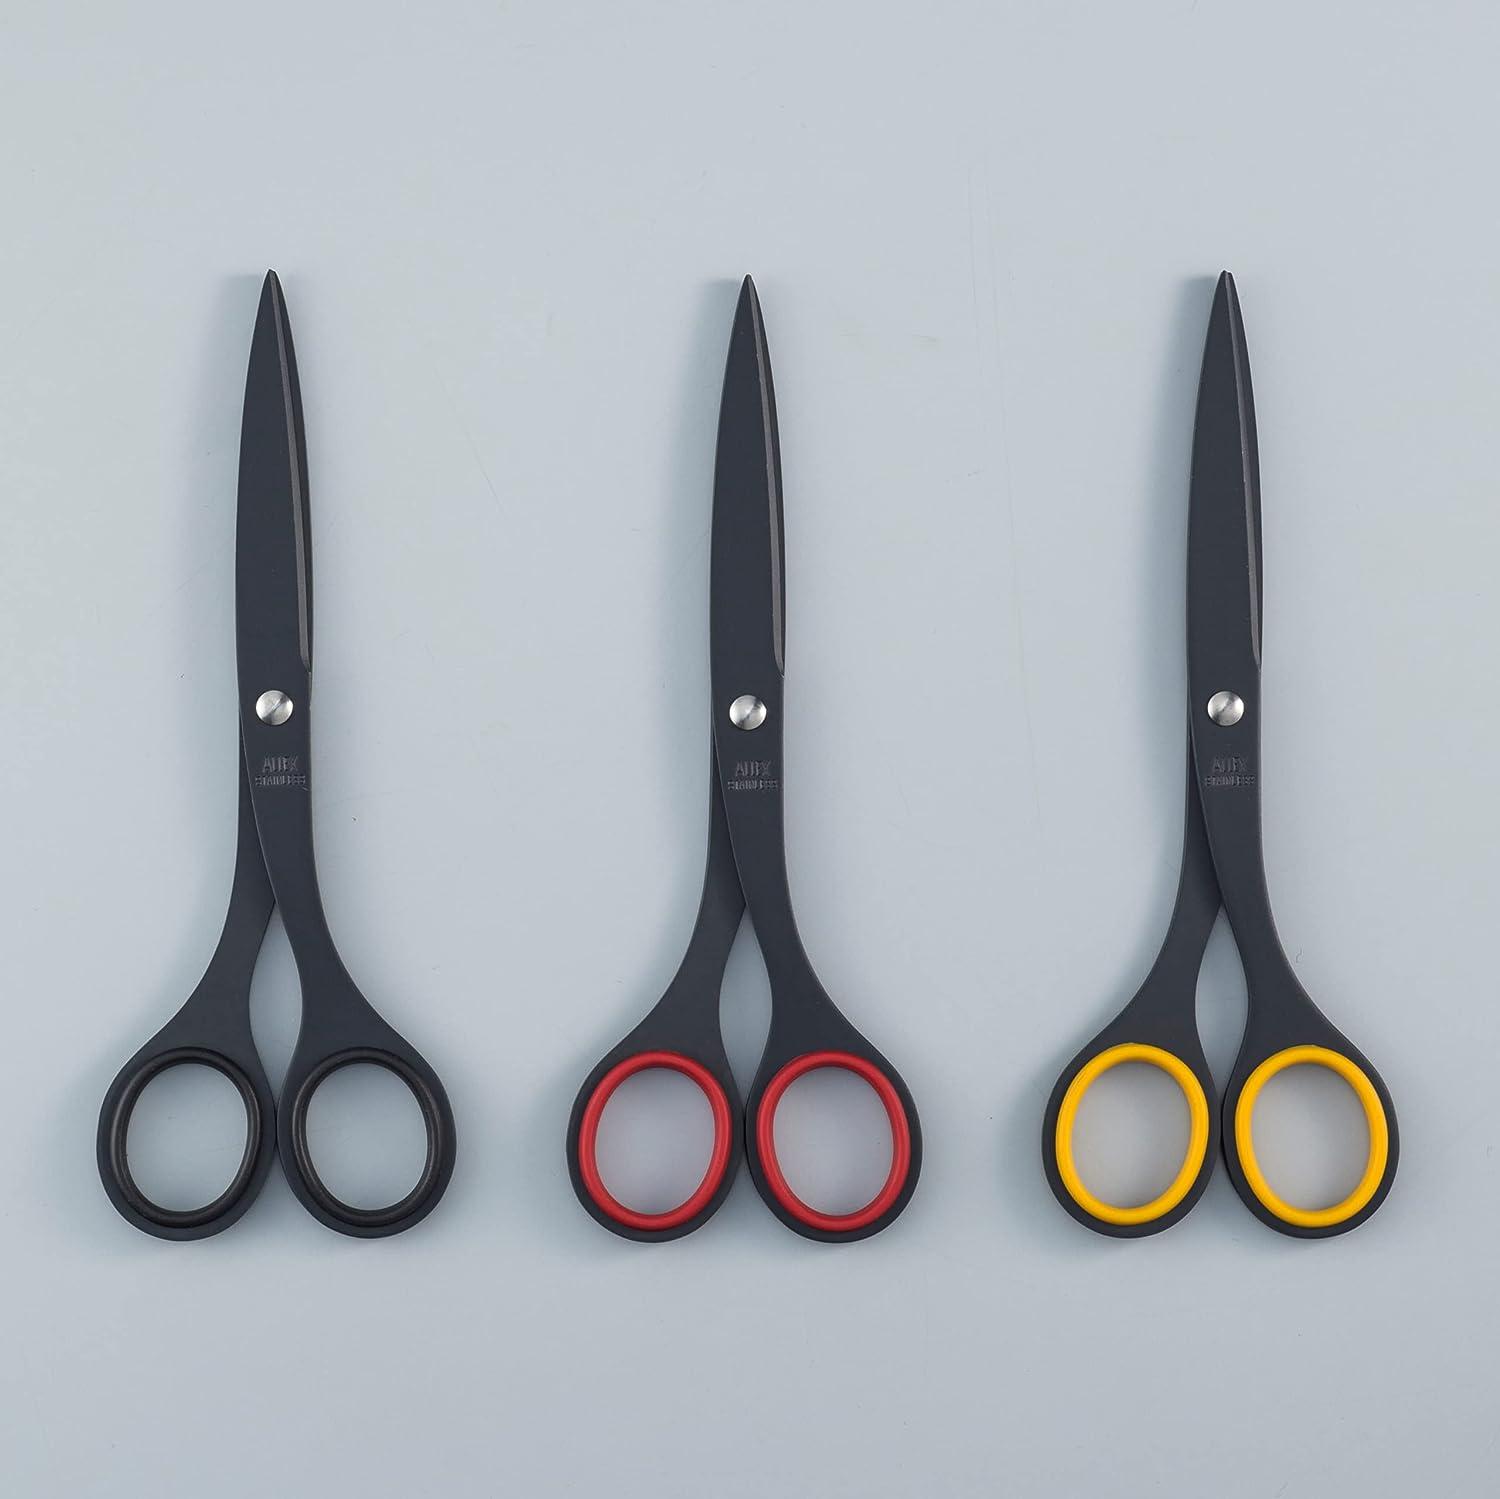  Scissors - Stainless Steel - Medium Straight - 5 inch